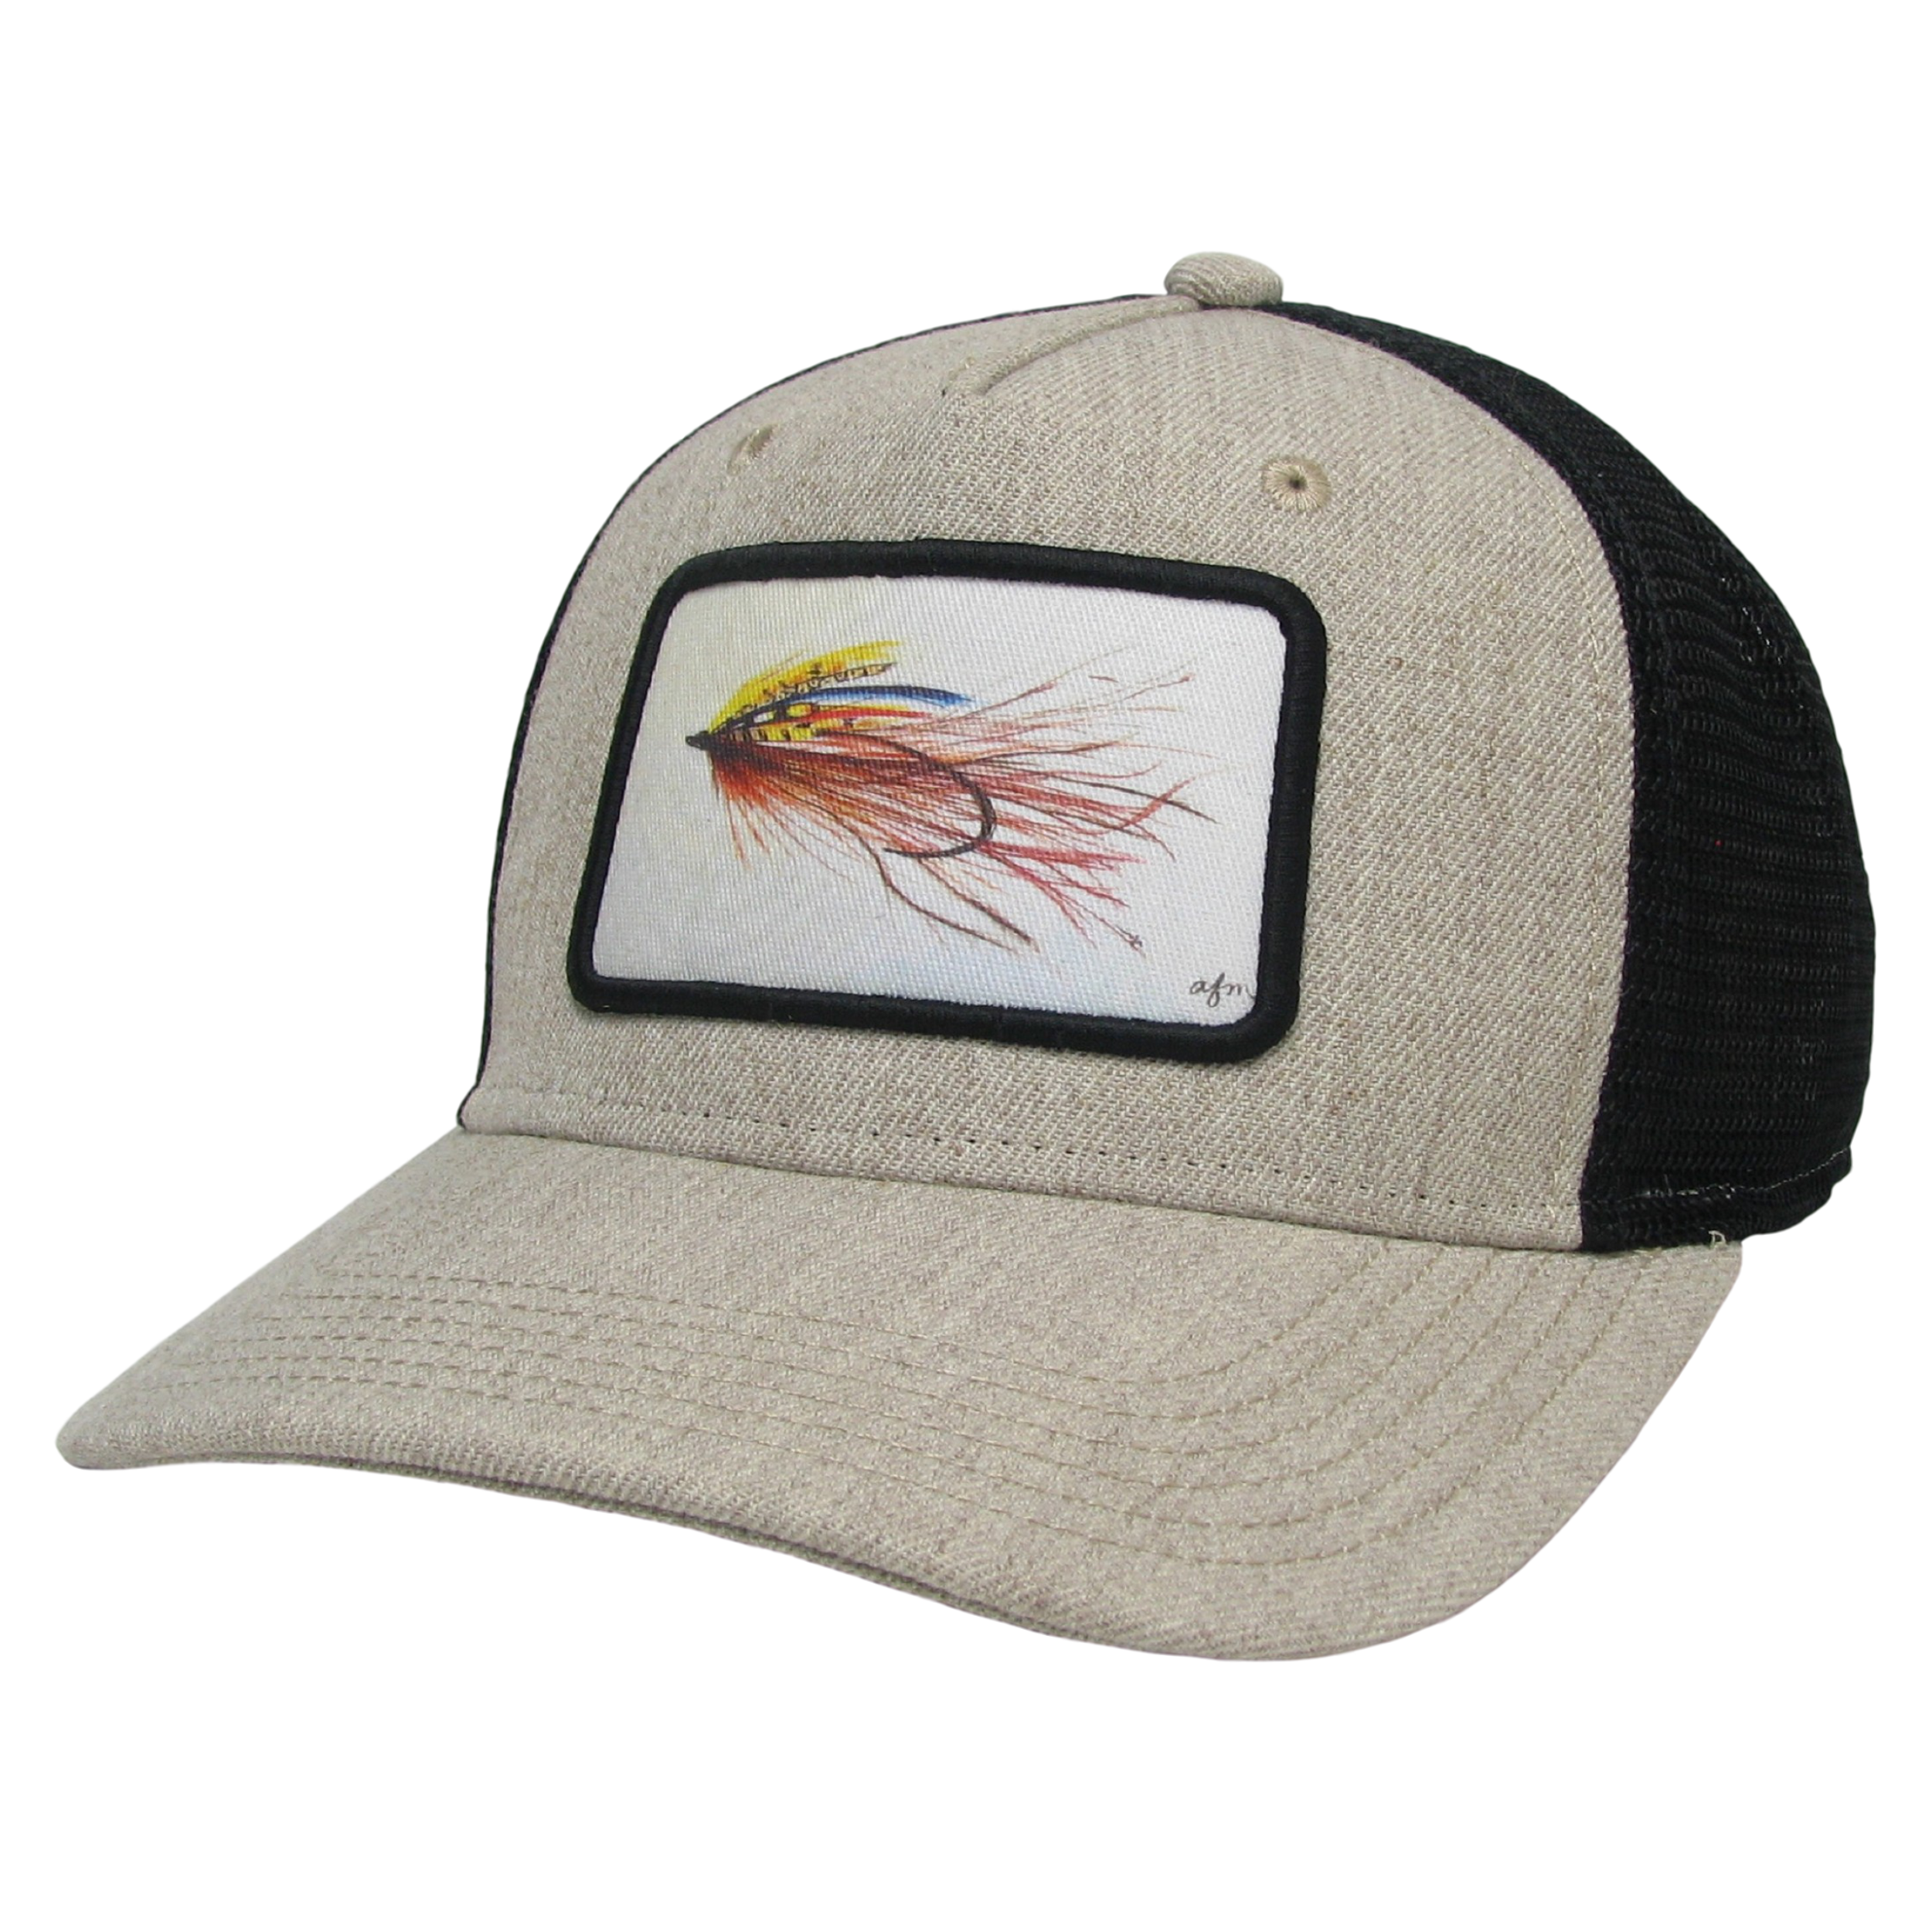 Streamer Fly Roadie Trucker Hat in Heather Tan/Black – Aisling